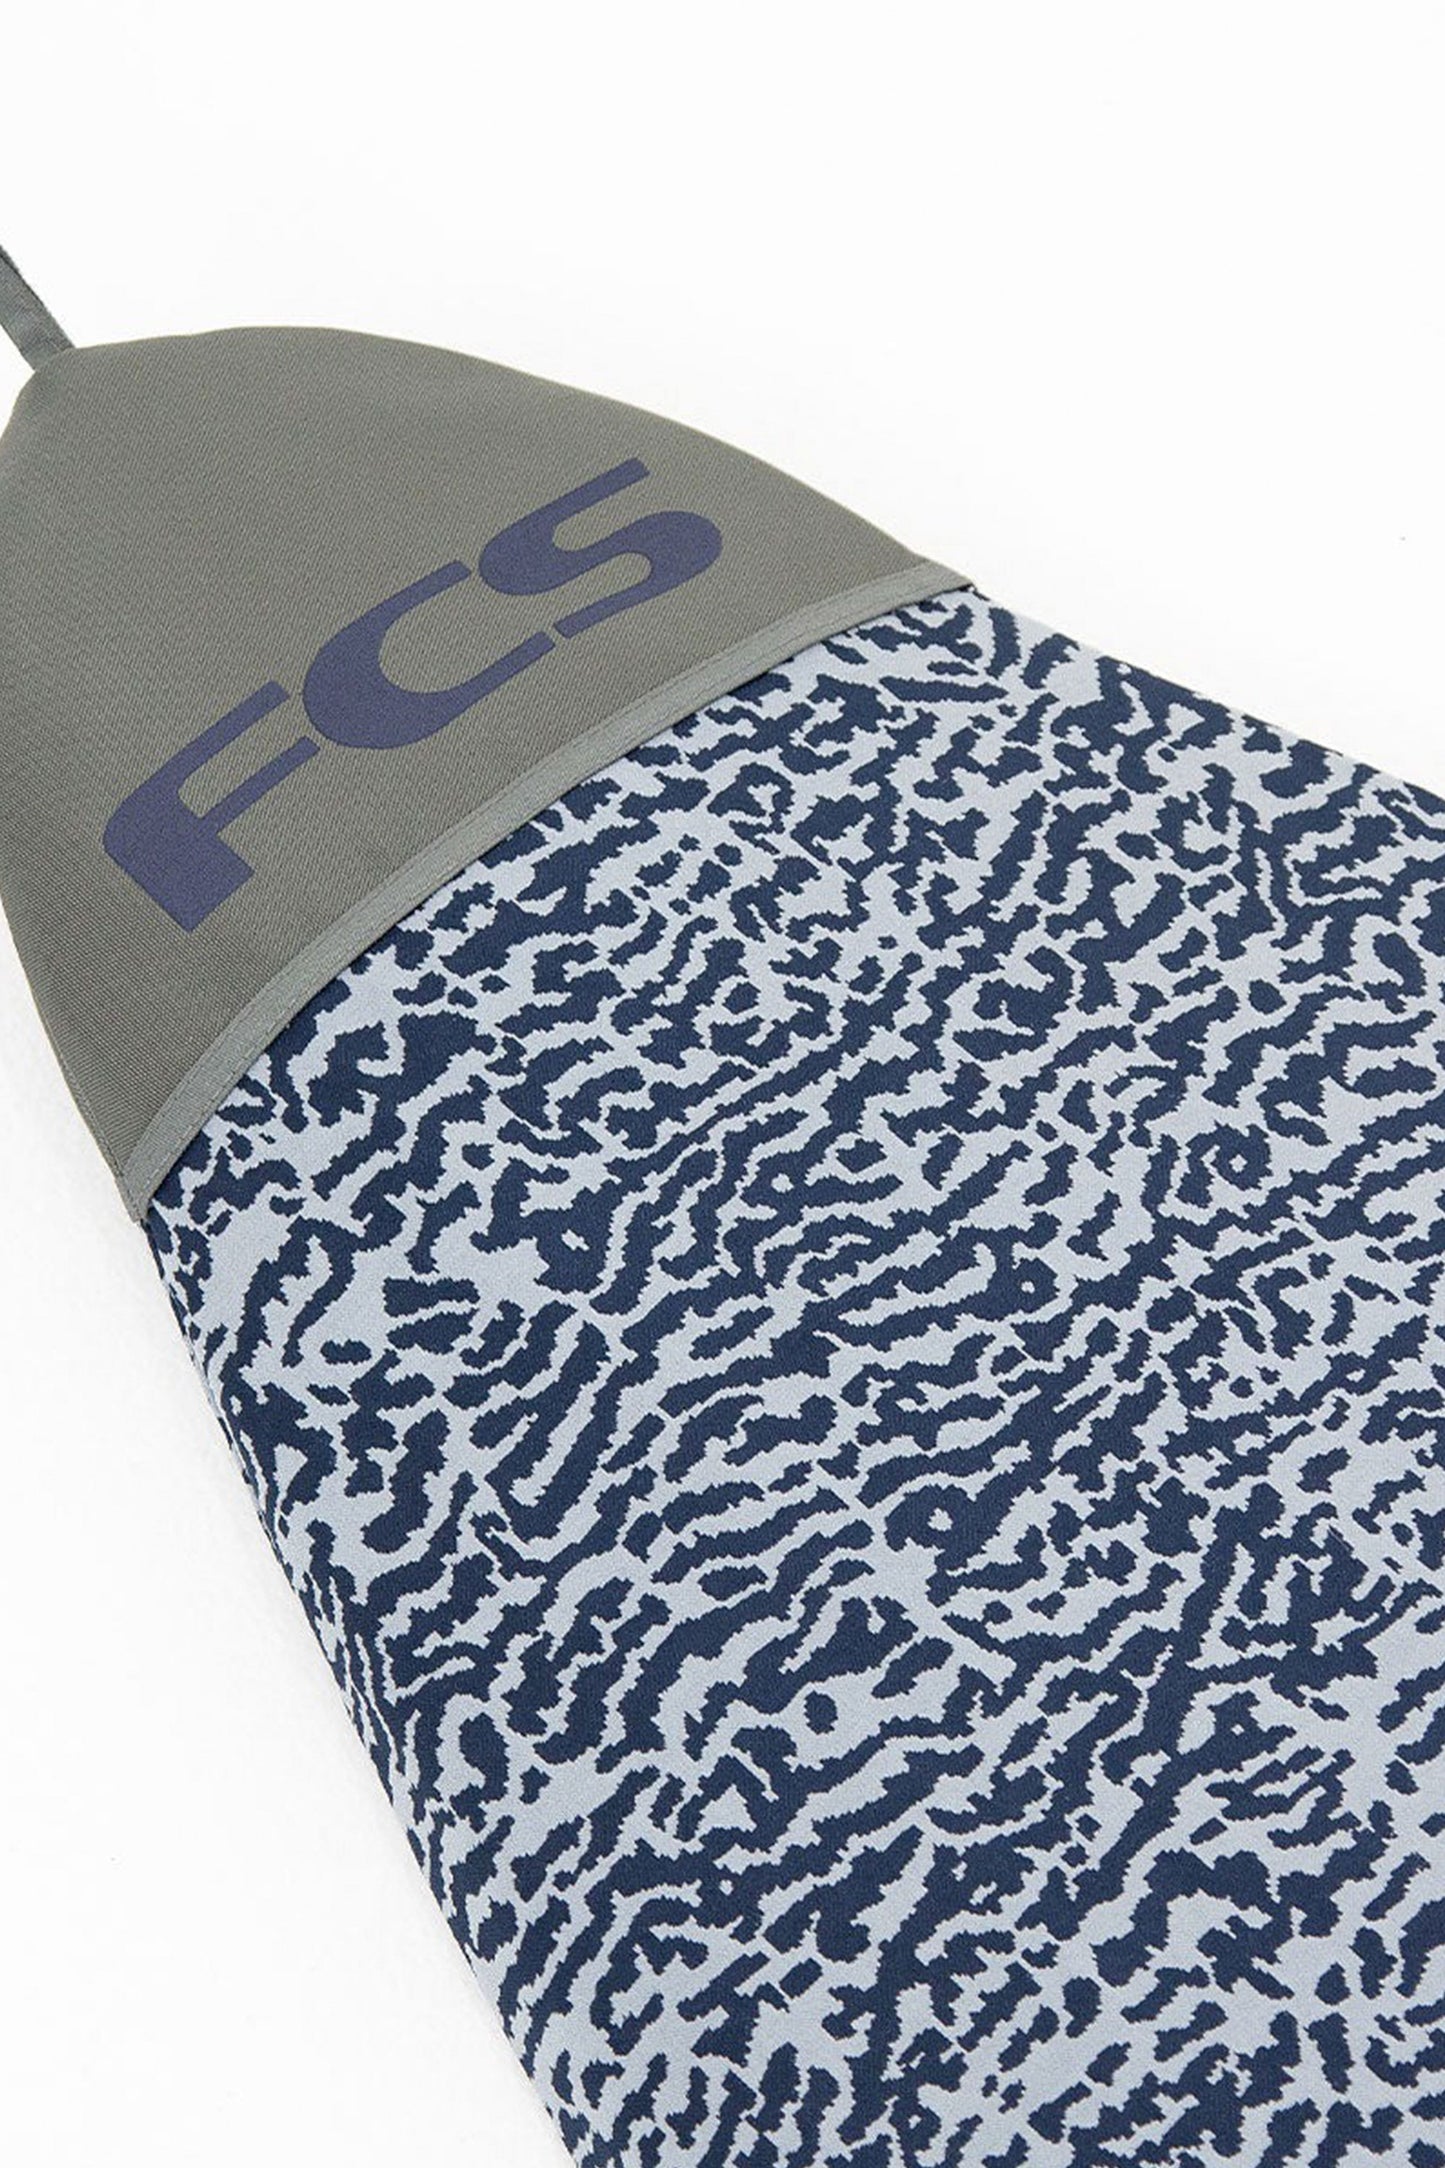 Pukas-Surf-Shop-FCS-boardbags-strech-fun-board-carbon